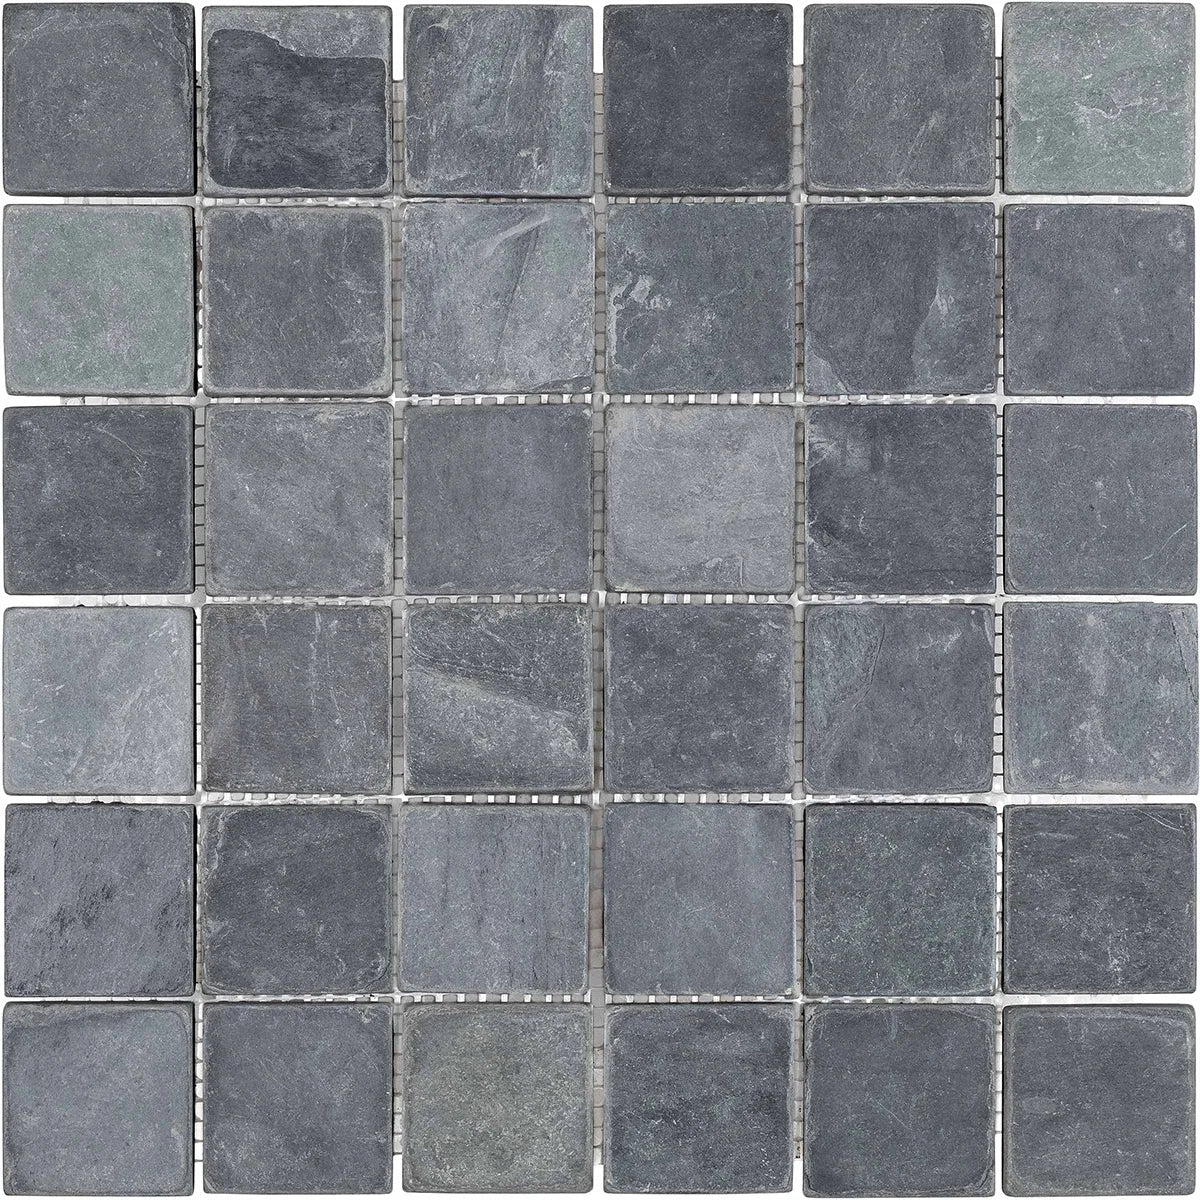 Chakra Slate Wall and Floor Square Mosaic Tile 2x2